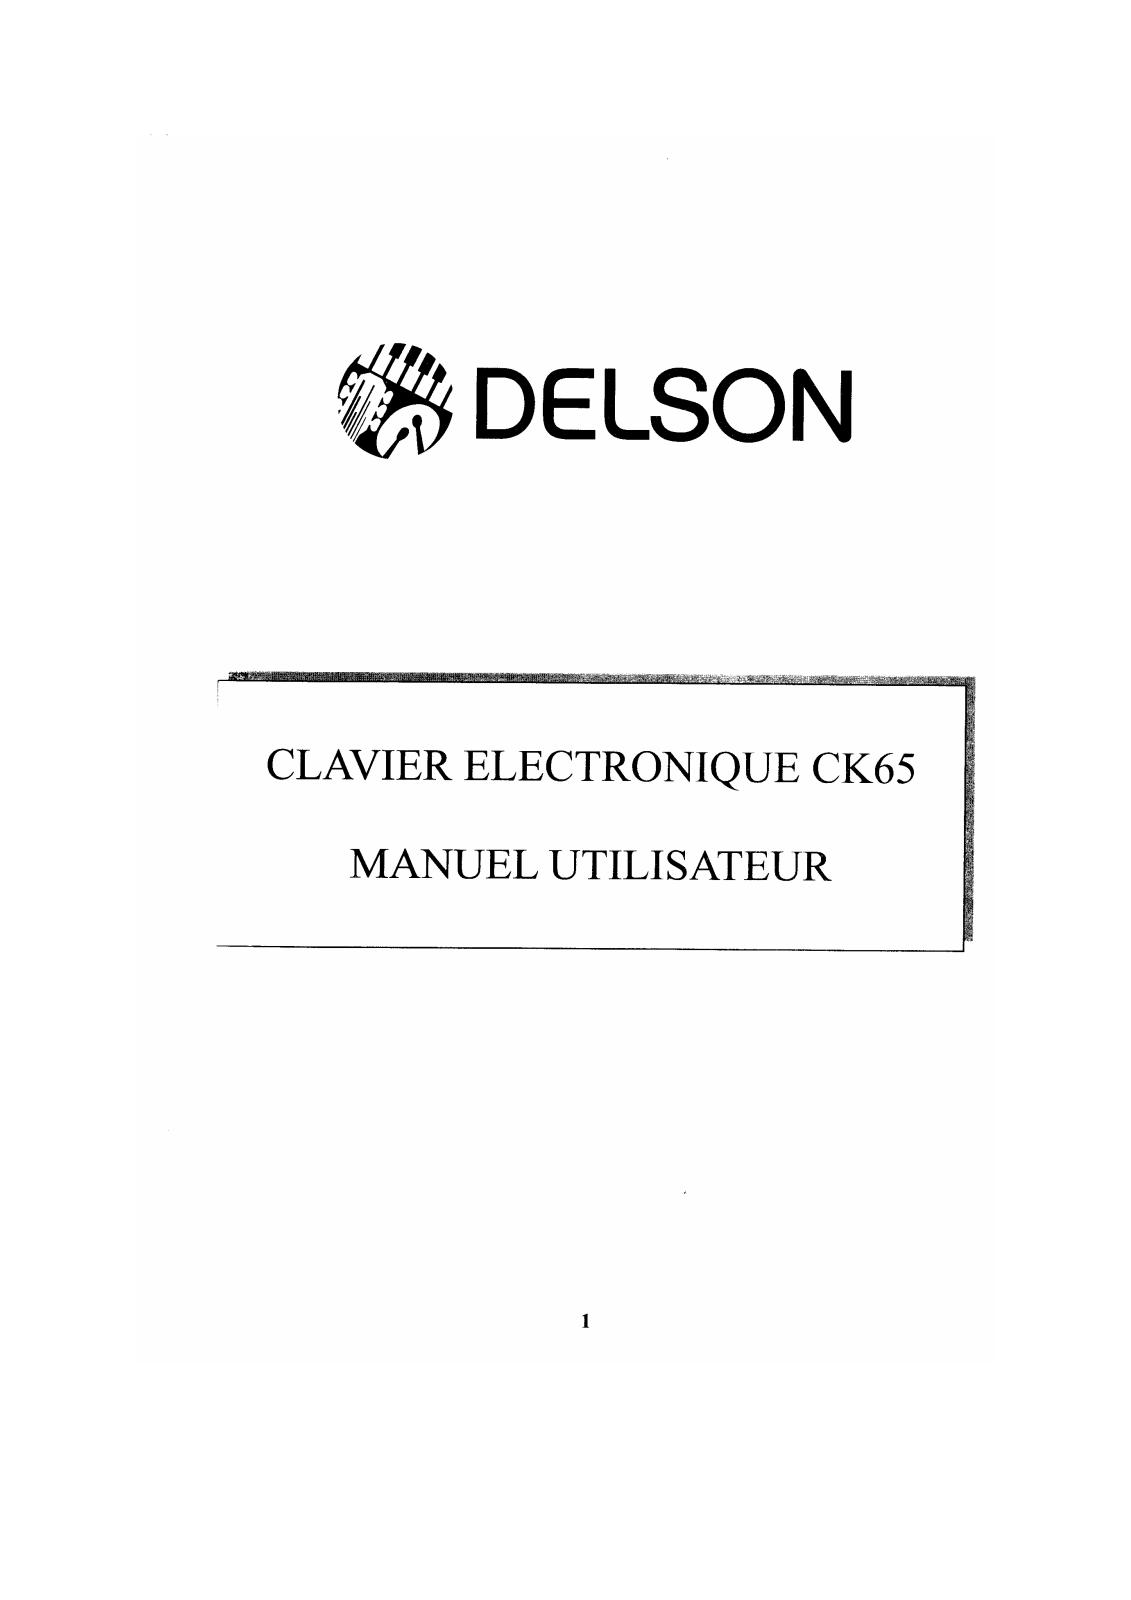 DELSON CK-65 User Manual